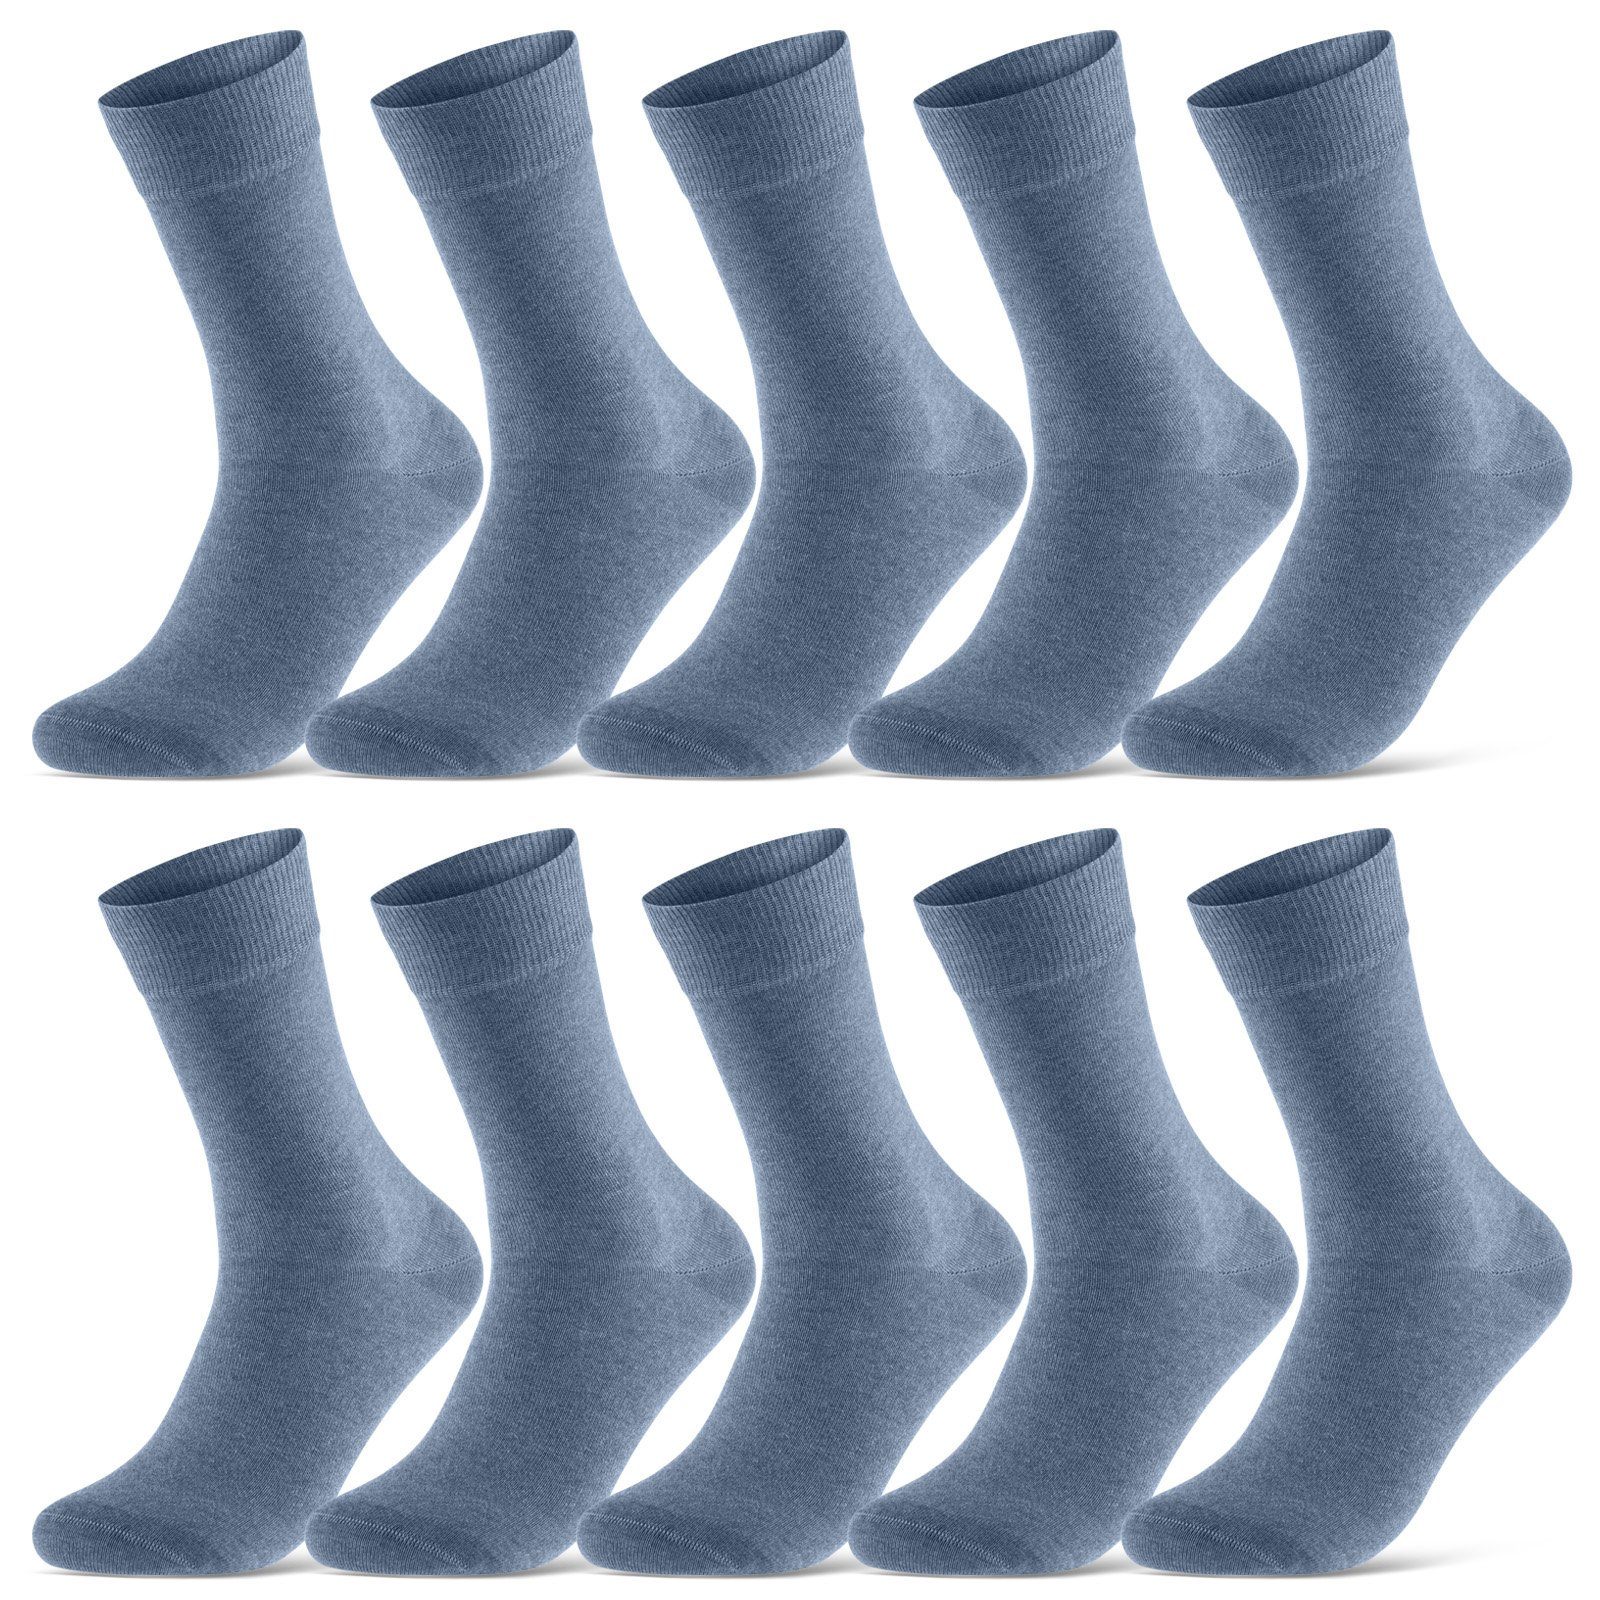 sockenkauf24 Socken 10 Paar Damen & Herren Socken Business Socken Baumwolle (Jeans, 39-42) mit Komfortbund (Basicline) - 70201T WP | Lange Socken